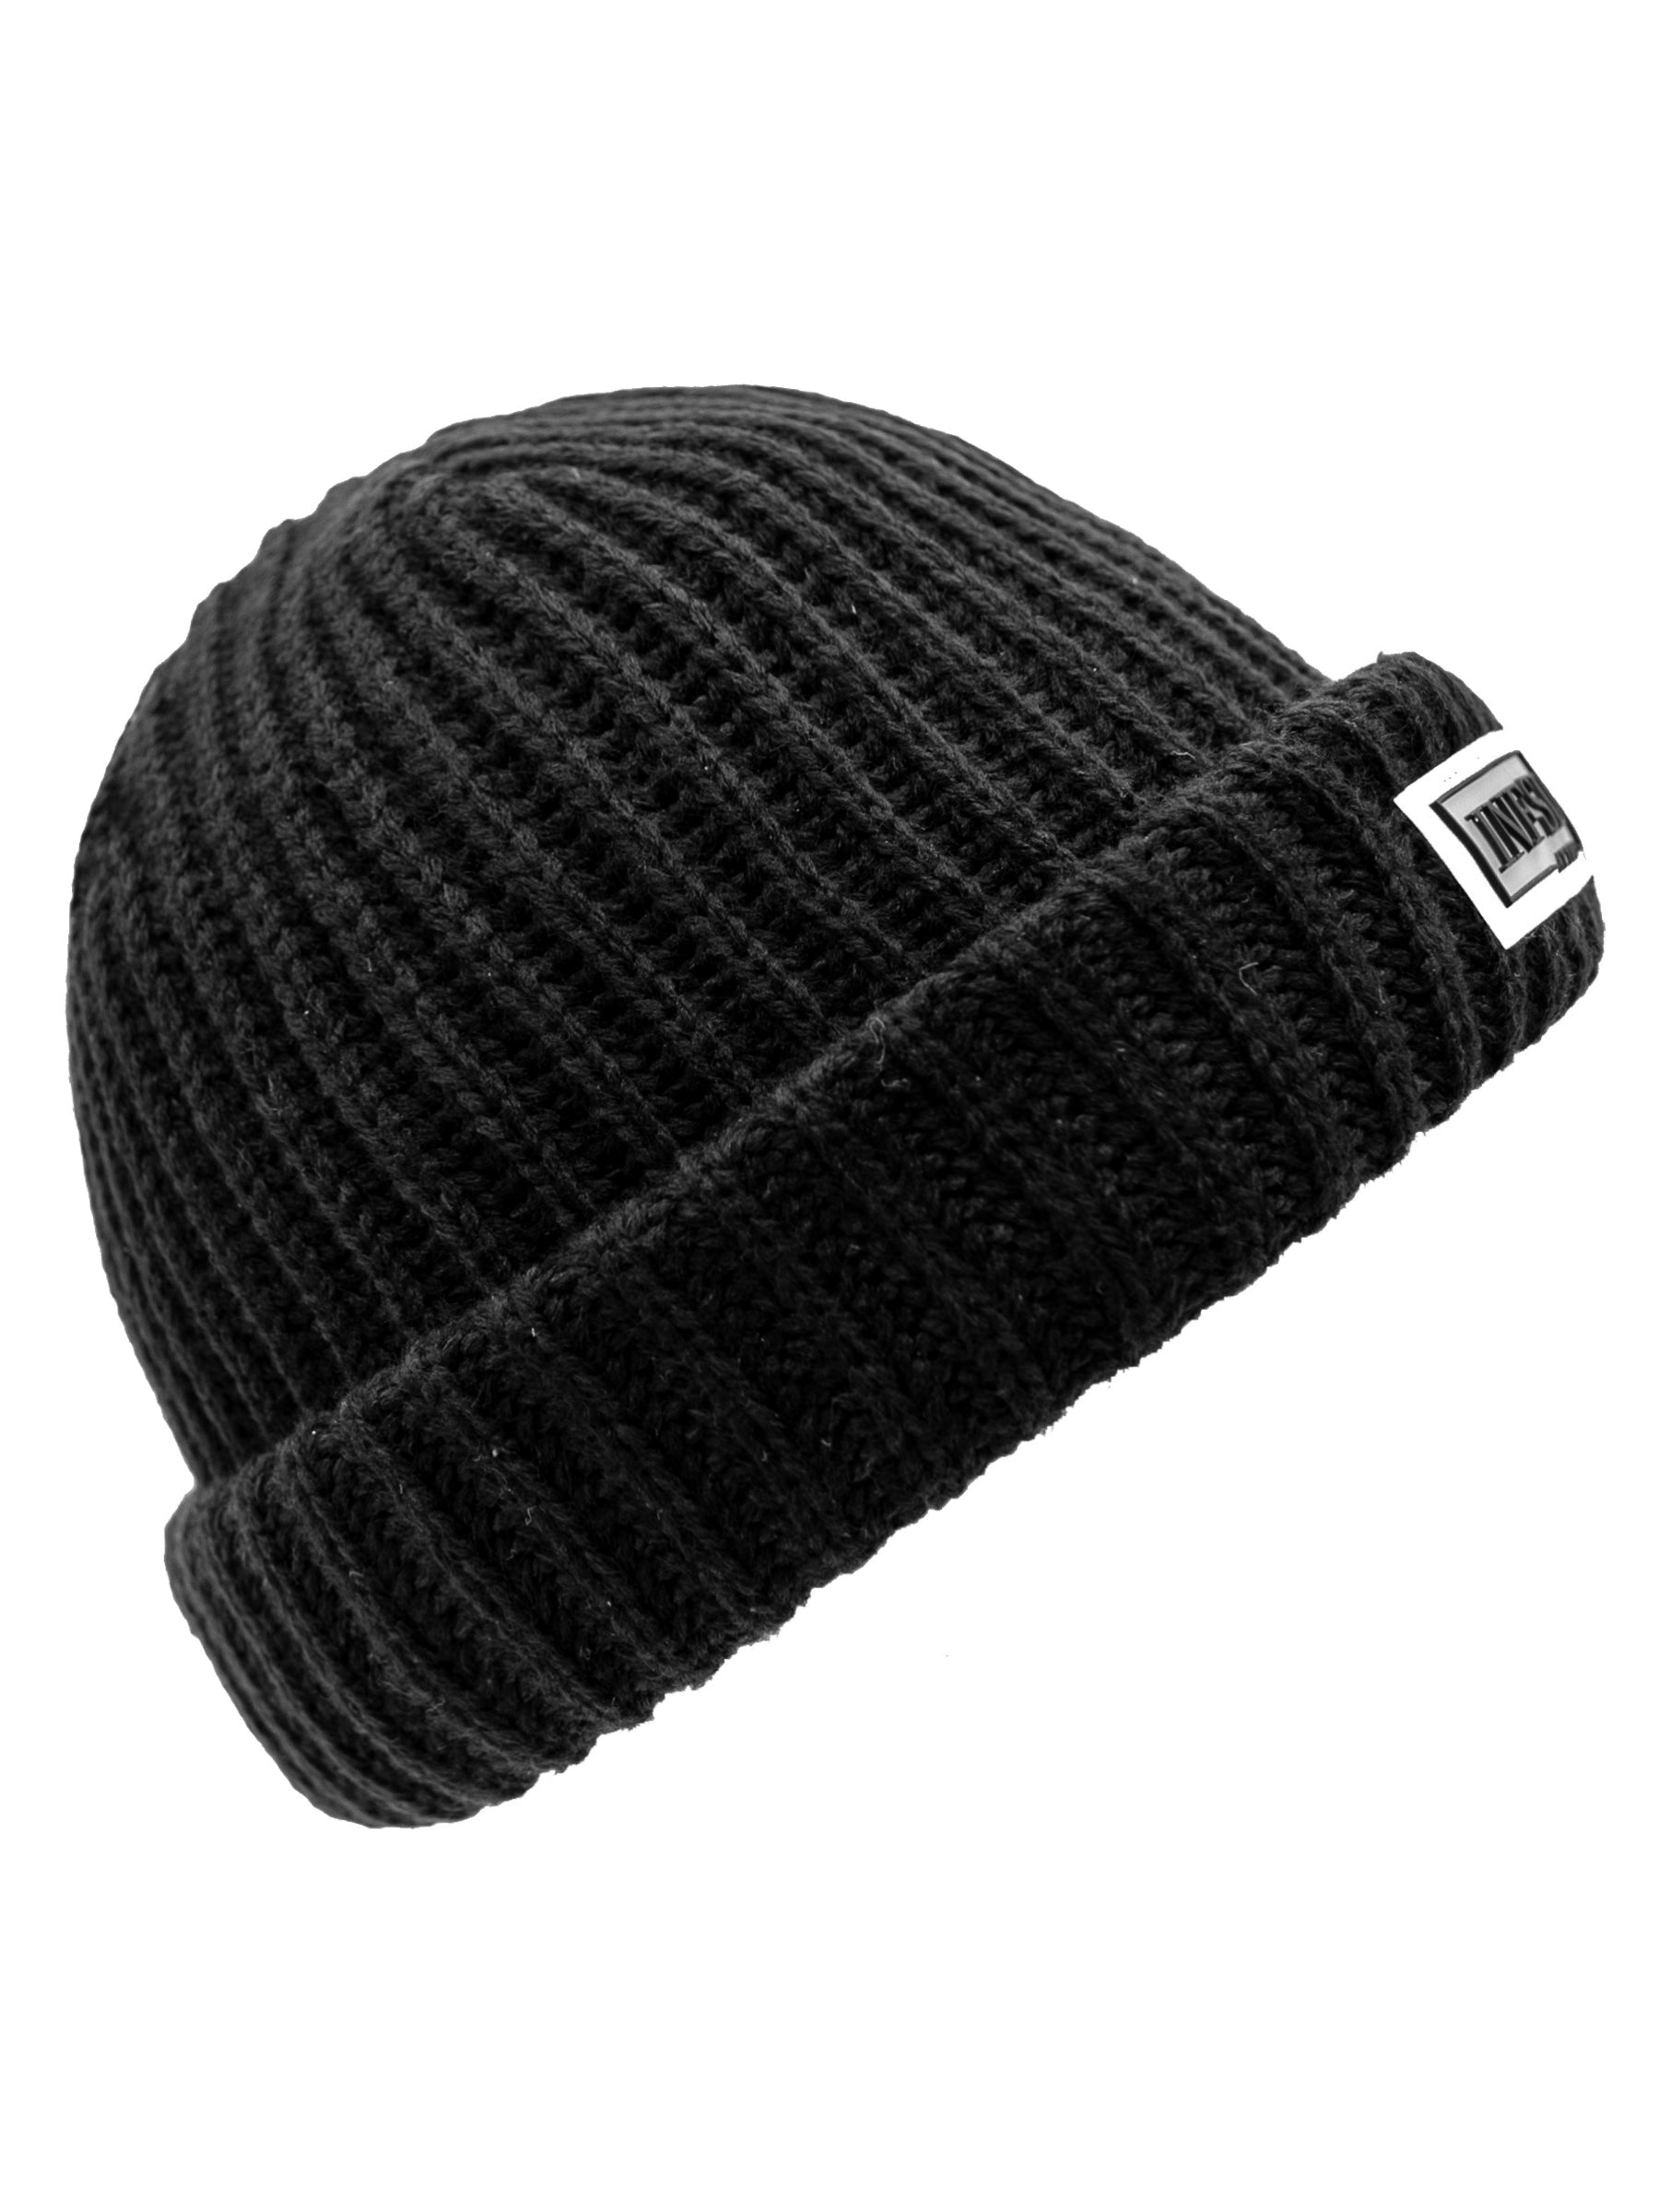 BAD BEANIE black - chunky knit